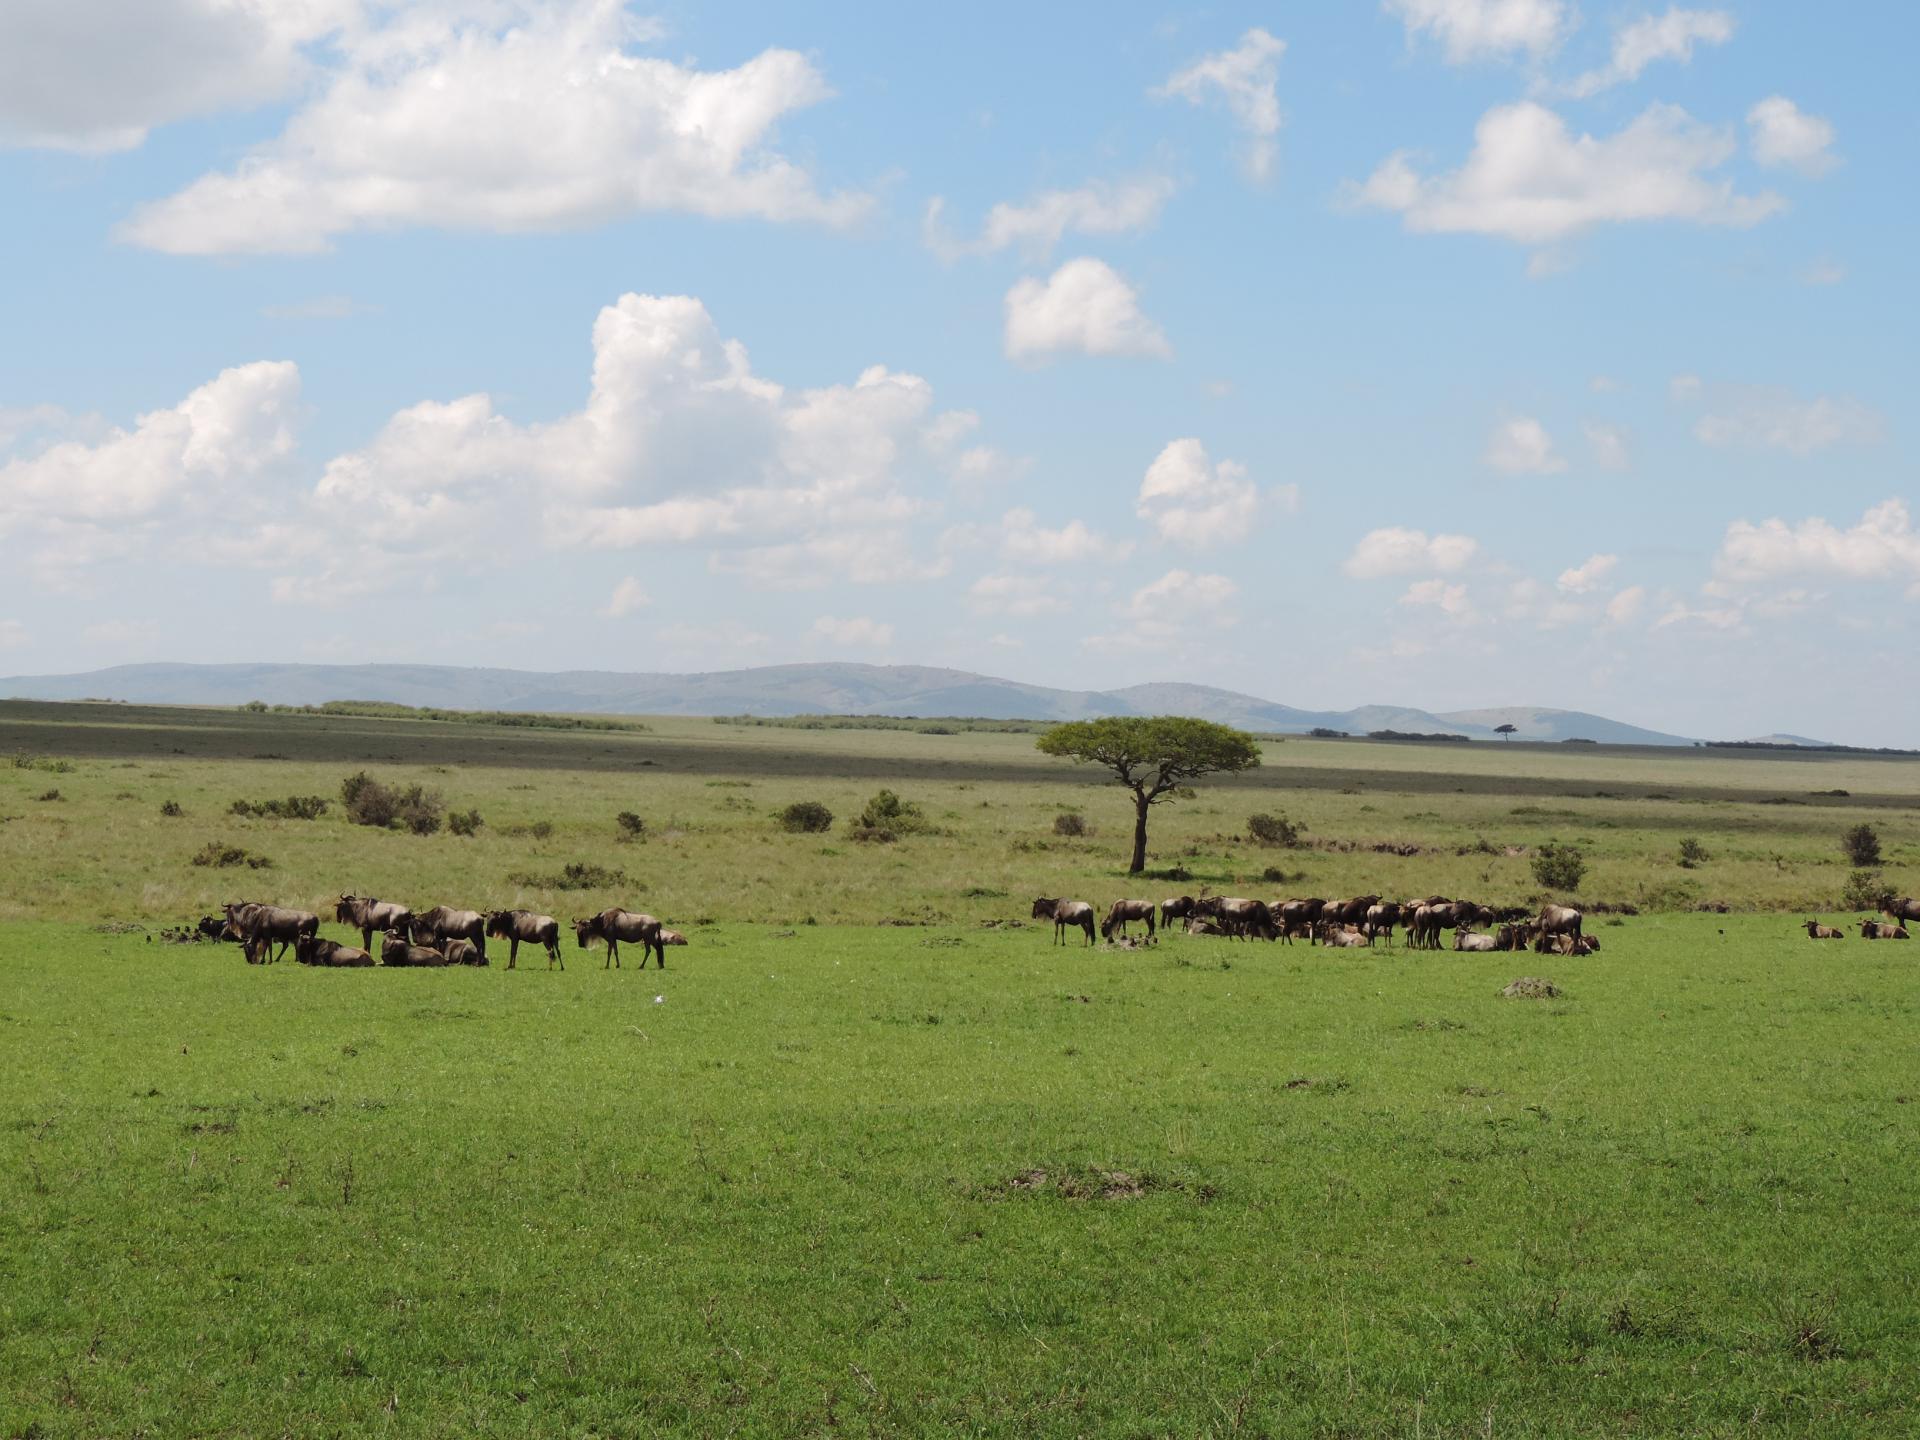 Wildebeest & Sceanic Views of Masai Mara Kenya Adventure Budget Safaris.